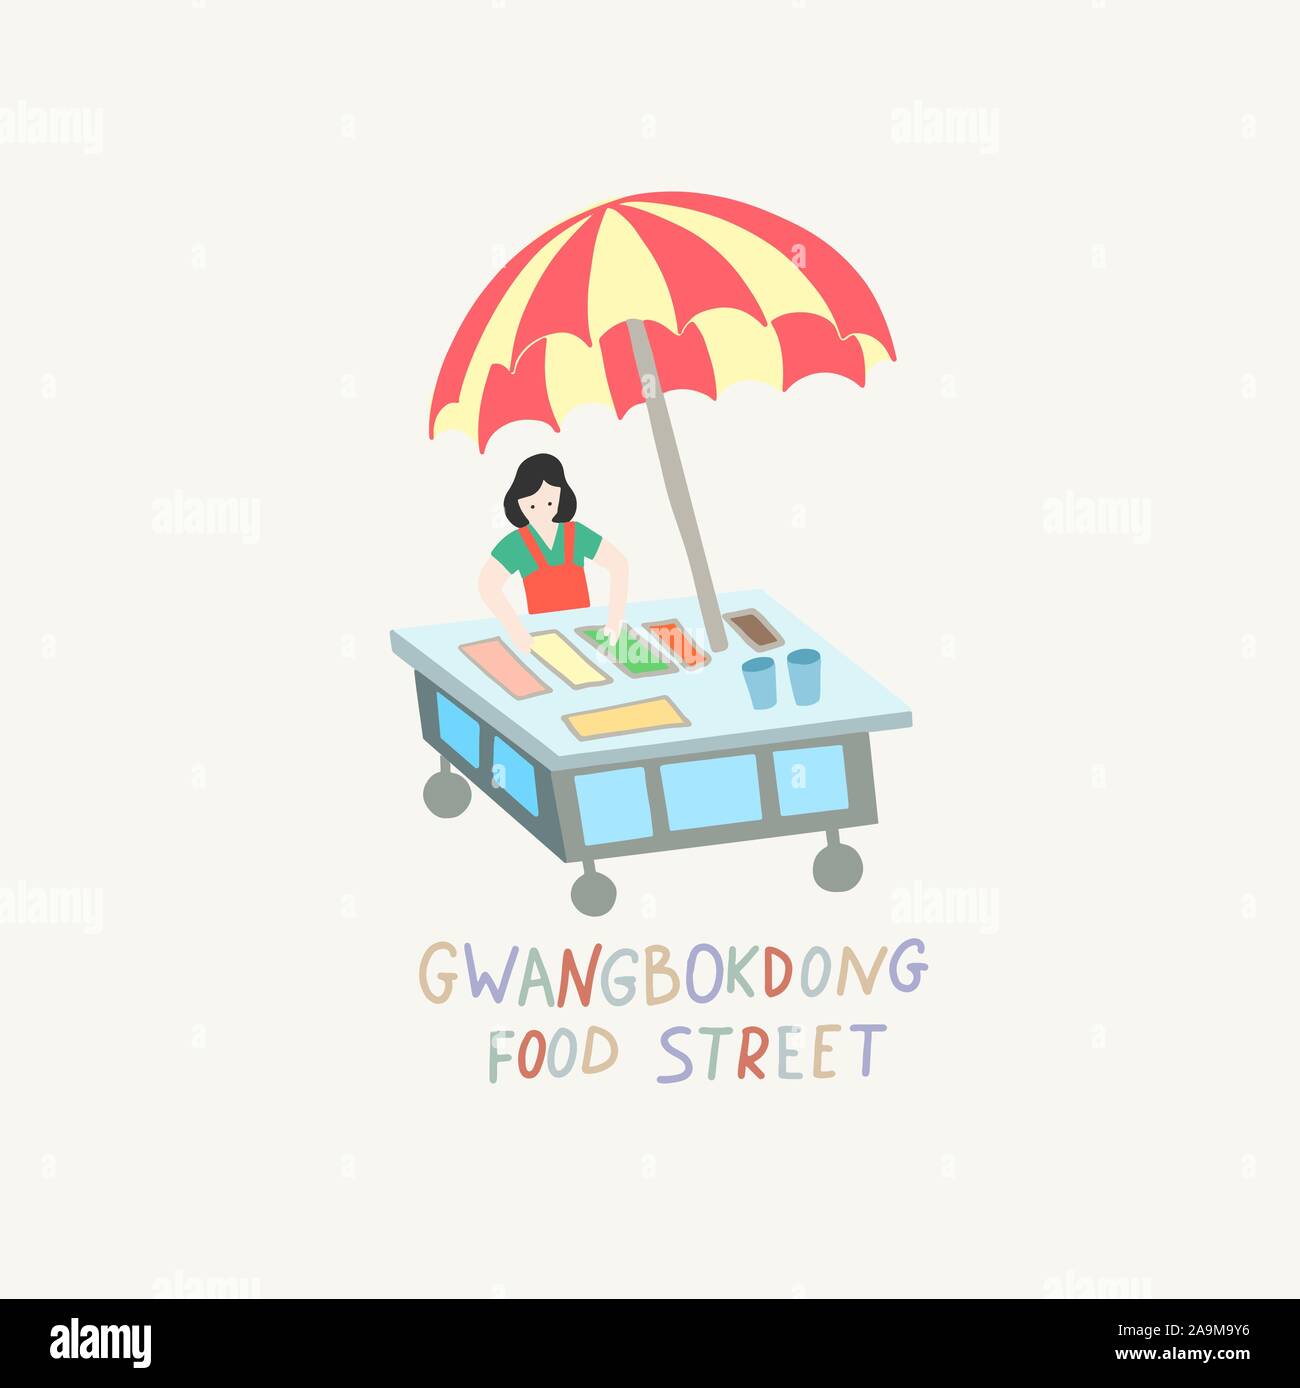 Doodle flachbild Vector Illustration von gwangbokdong Food Street - dem berühmten Markt in Busan Stock Vektor